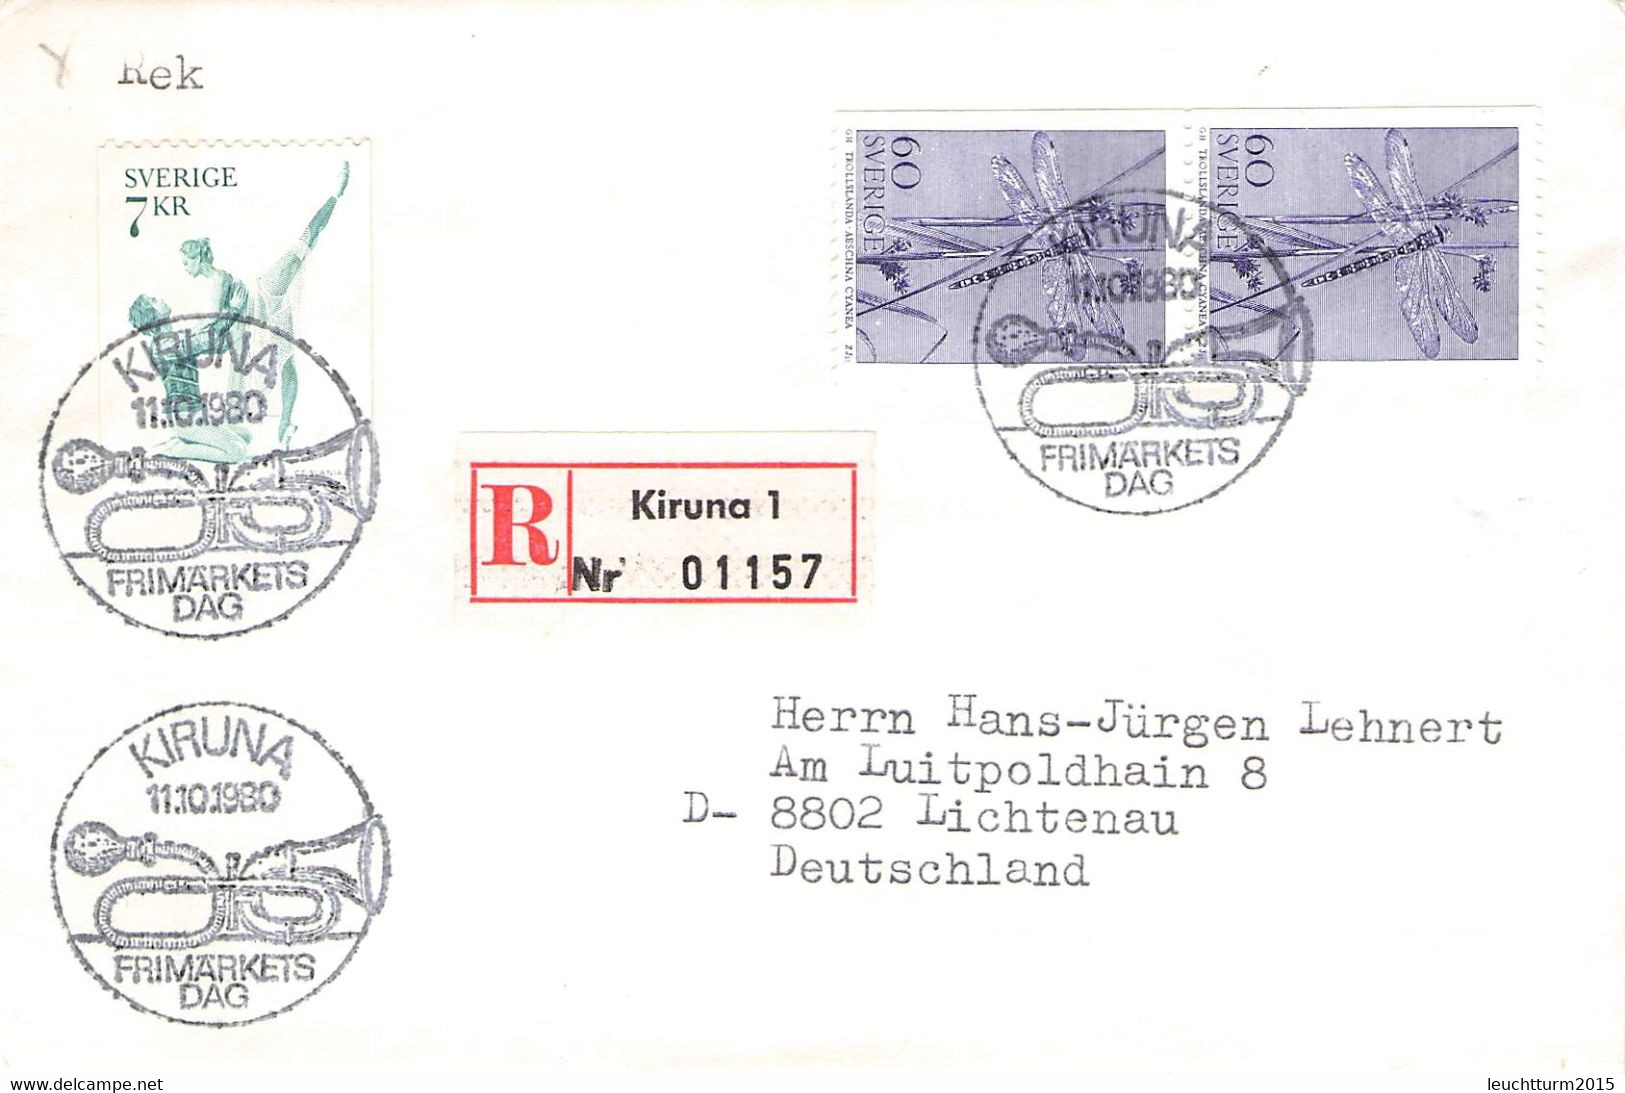 SWEDEN - REGISTERED MAIL 1980 KIRUNA > GERMANY / ZL271 - Lettres & Documents